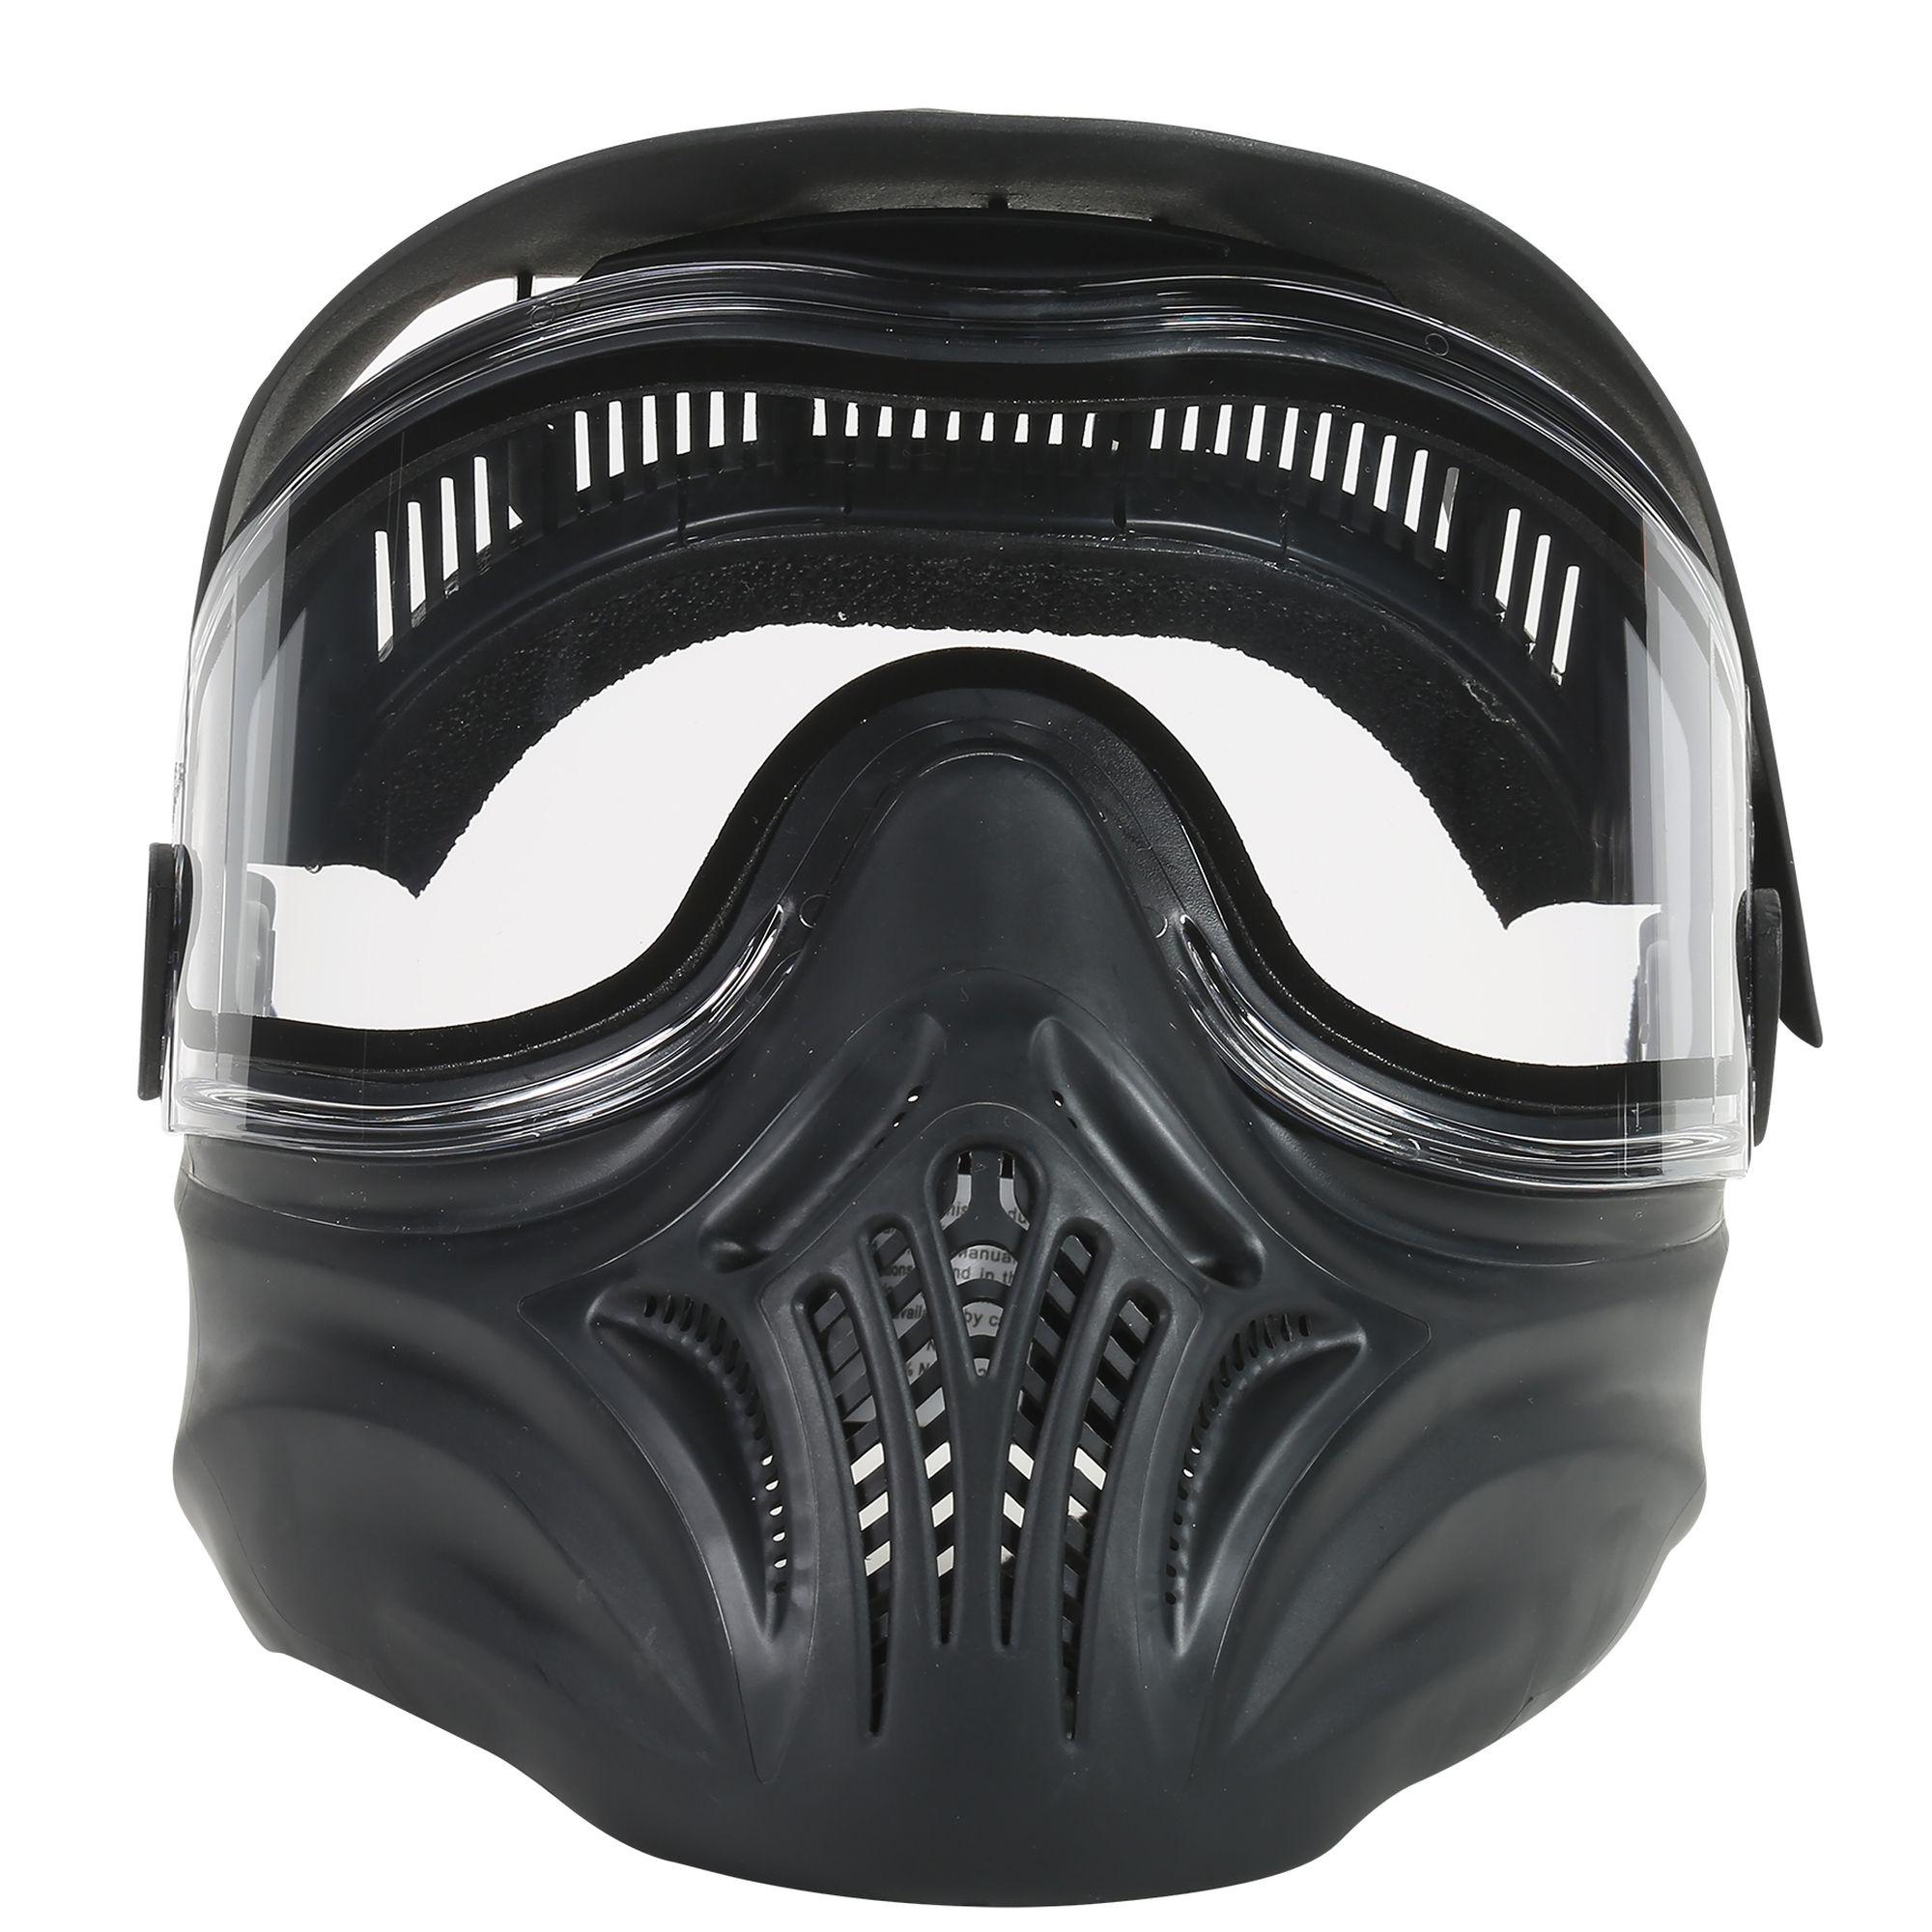 Empire Helix Paintball Mask, Black